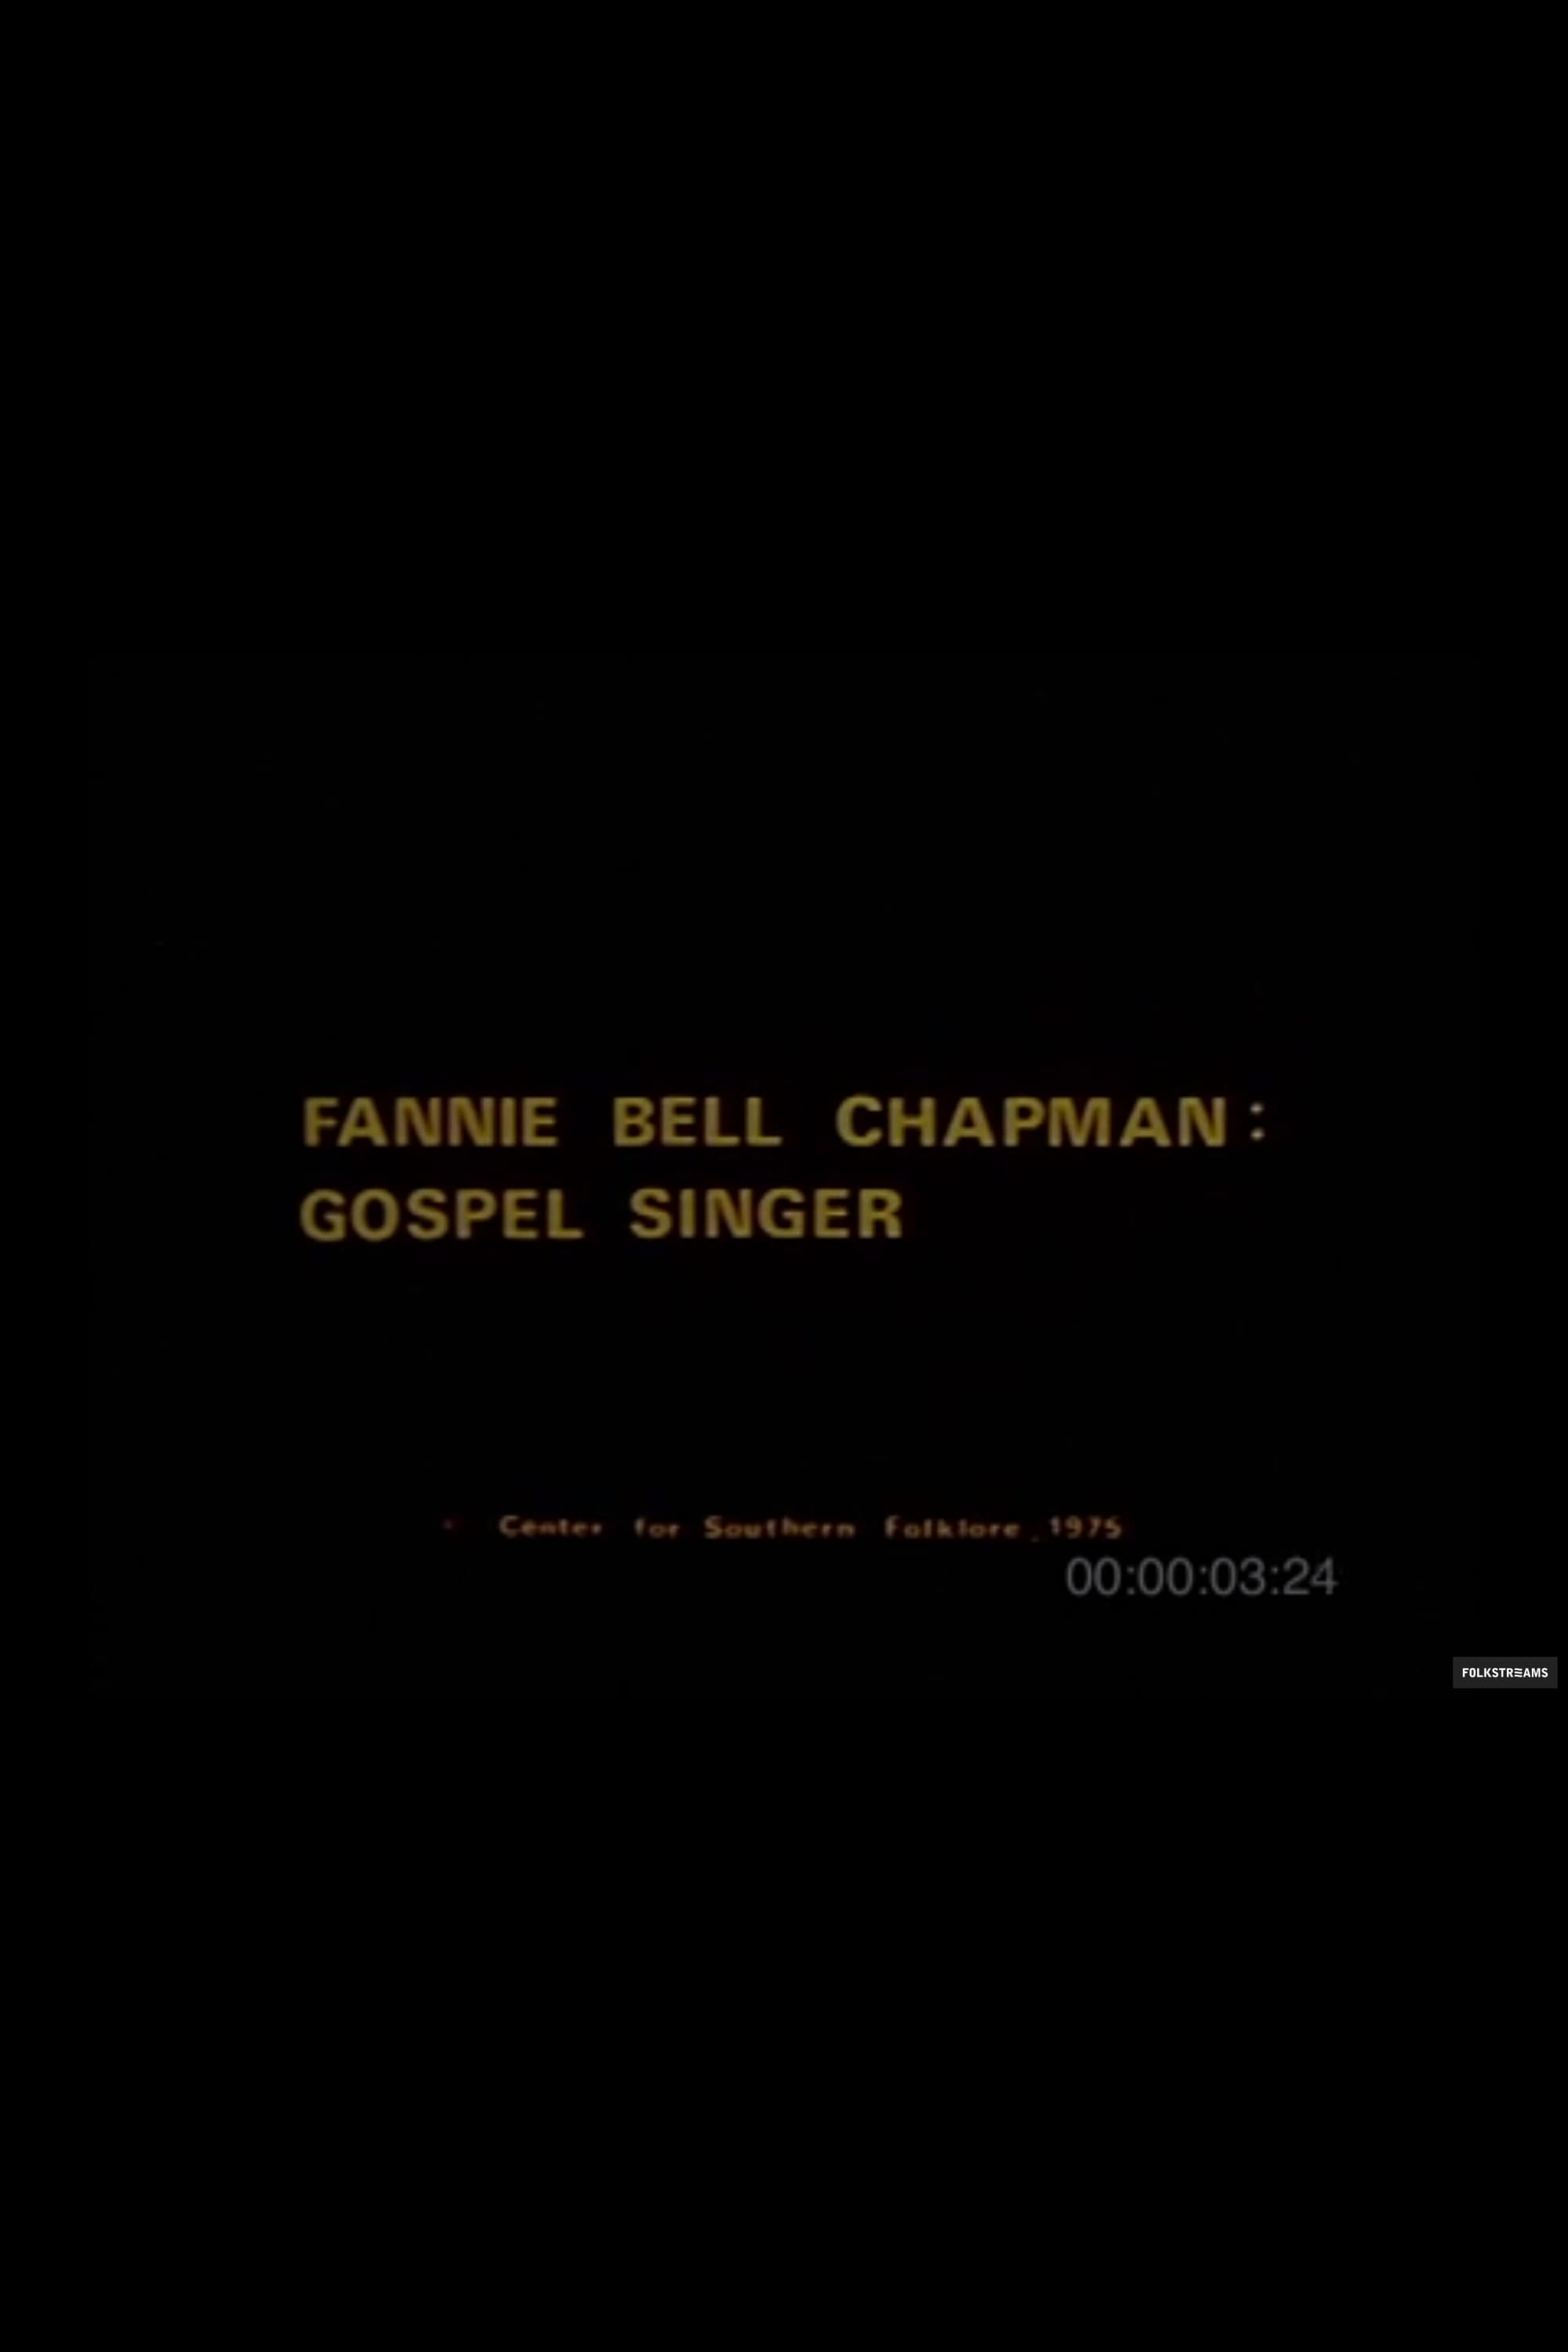 Fannie Bell Chapman: Gospel Singer